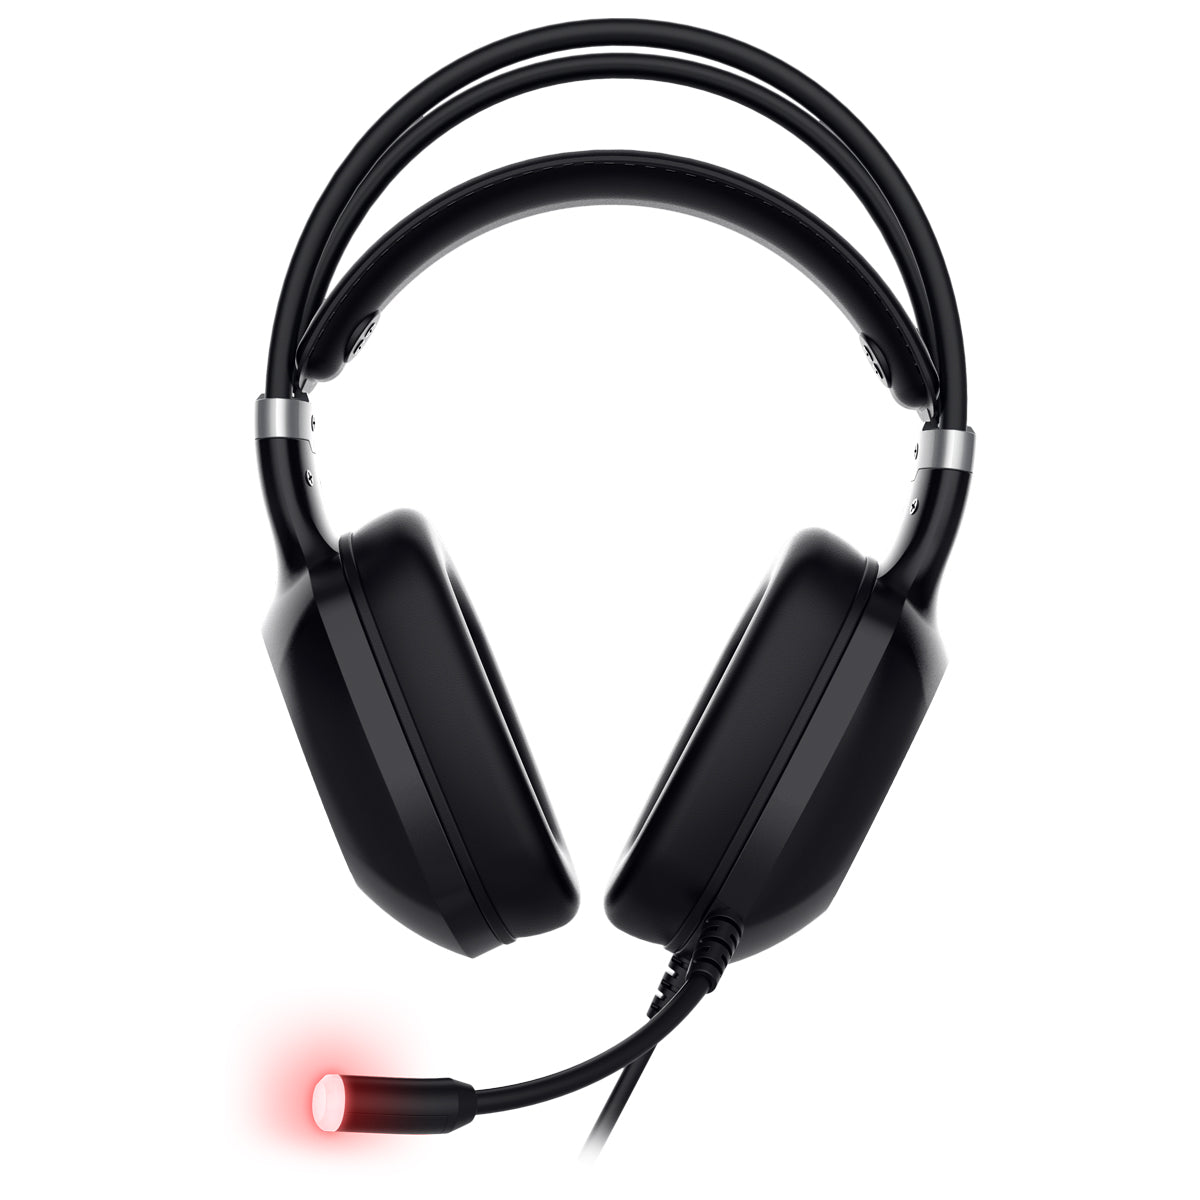 ABKO - 韓國 ABKONCORE CH55 V7.1聲道電競耳機 極輕身(270g) 智能震感,降燥, RGB